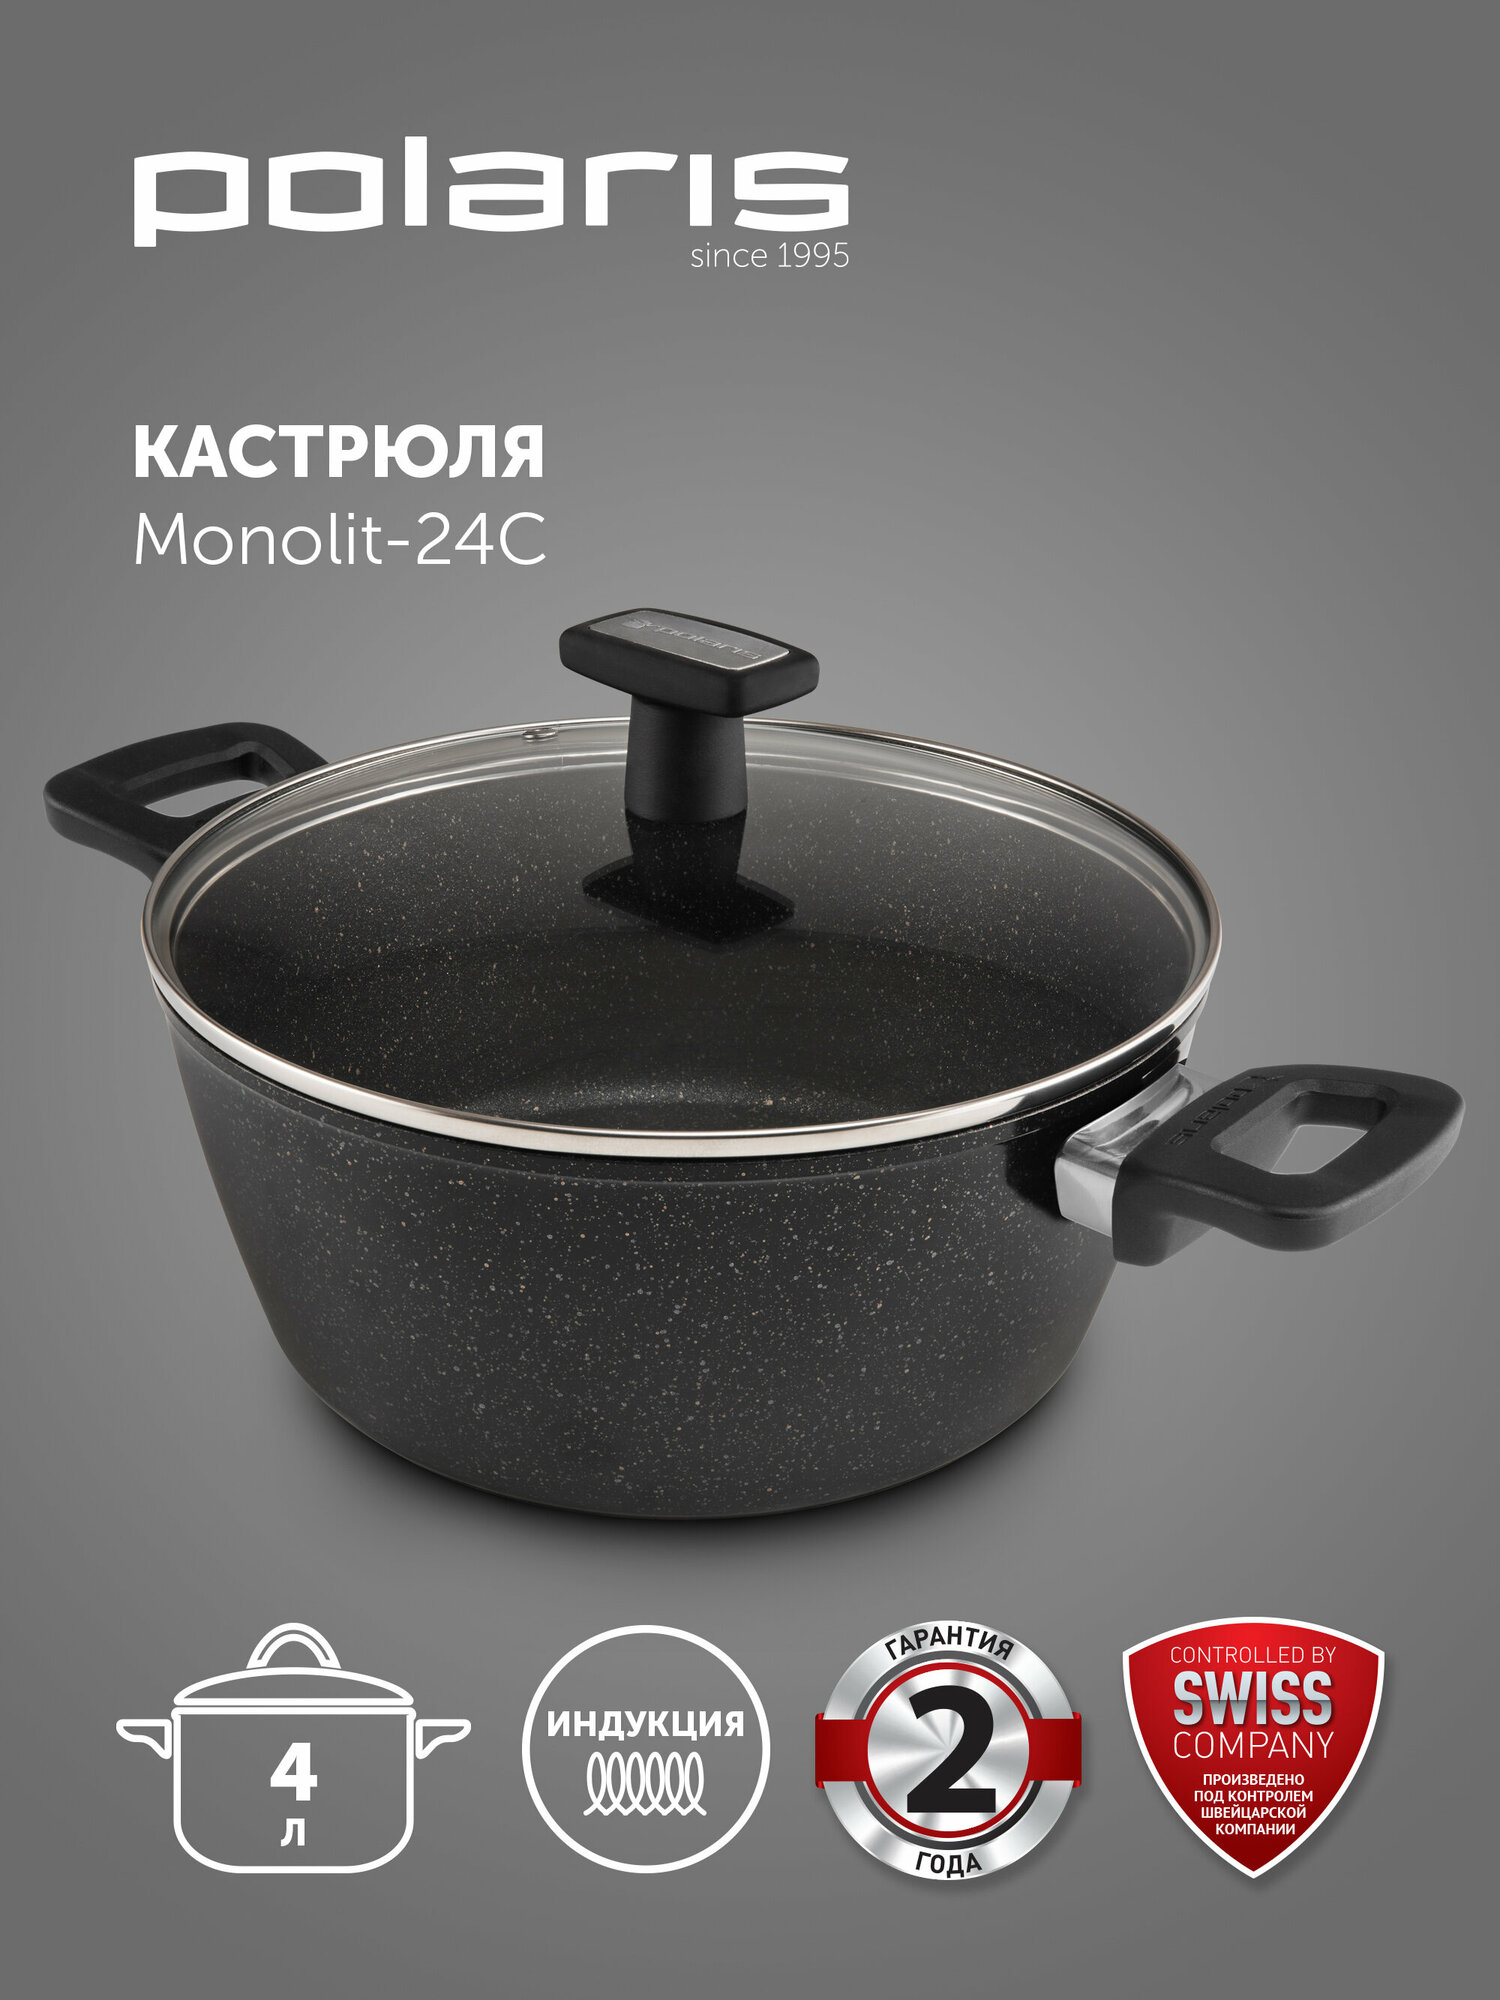 Кастрюля Monolit-24C ков.ал., 4 л (POLARIS)